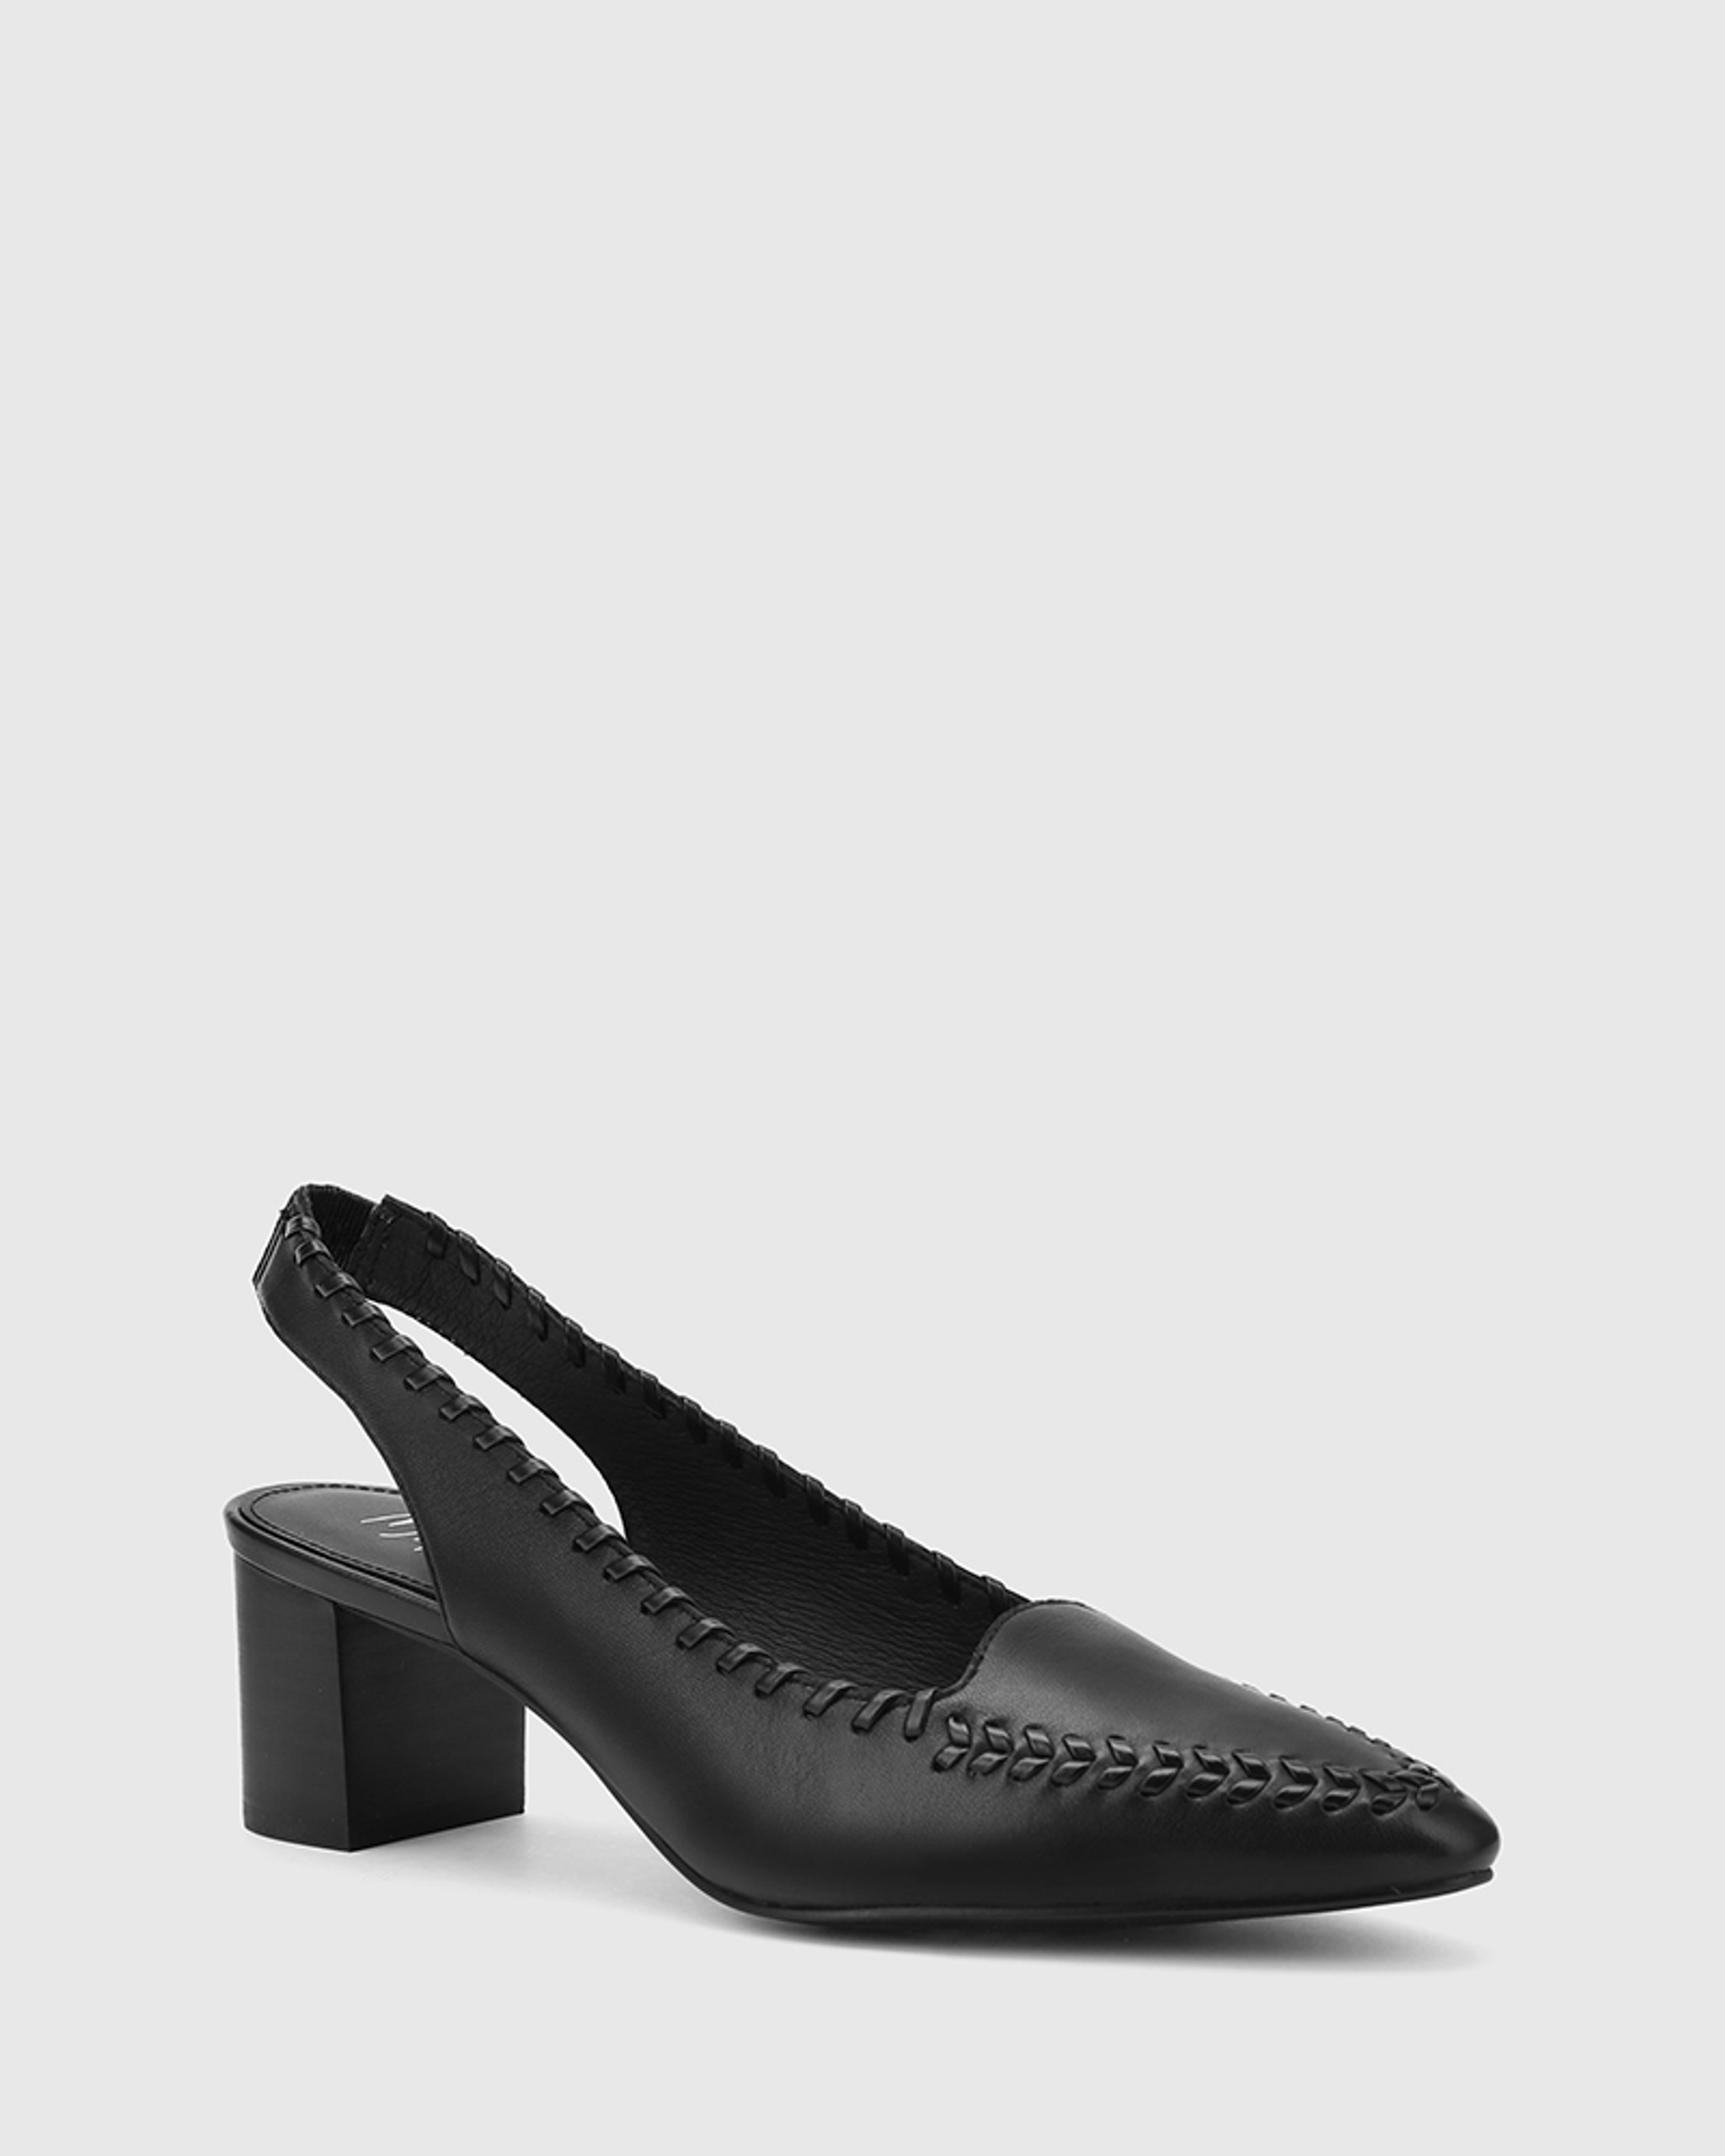 black leather slingback heels